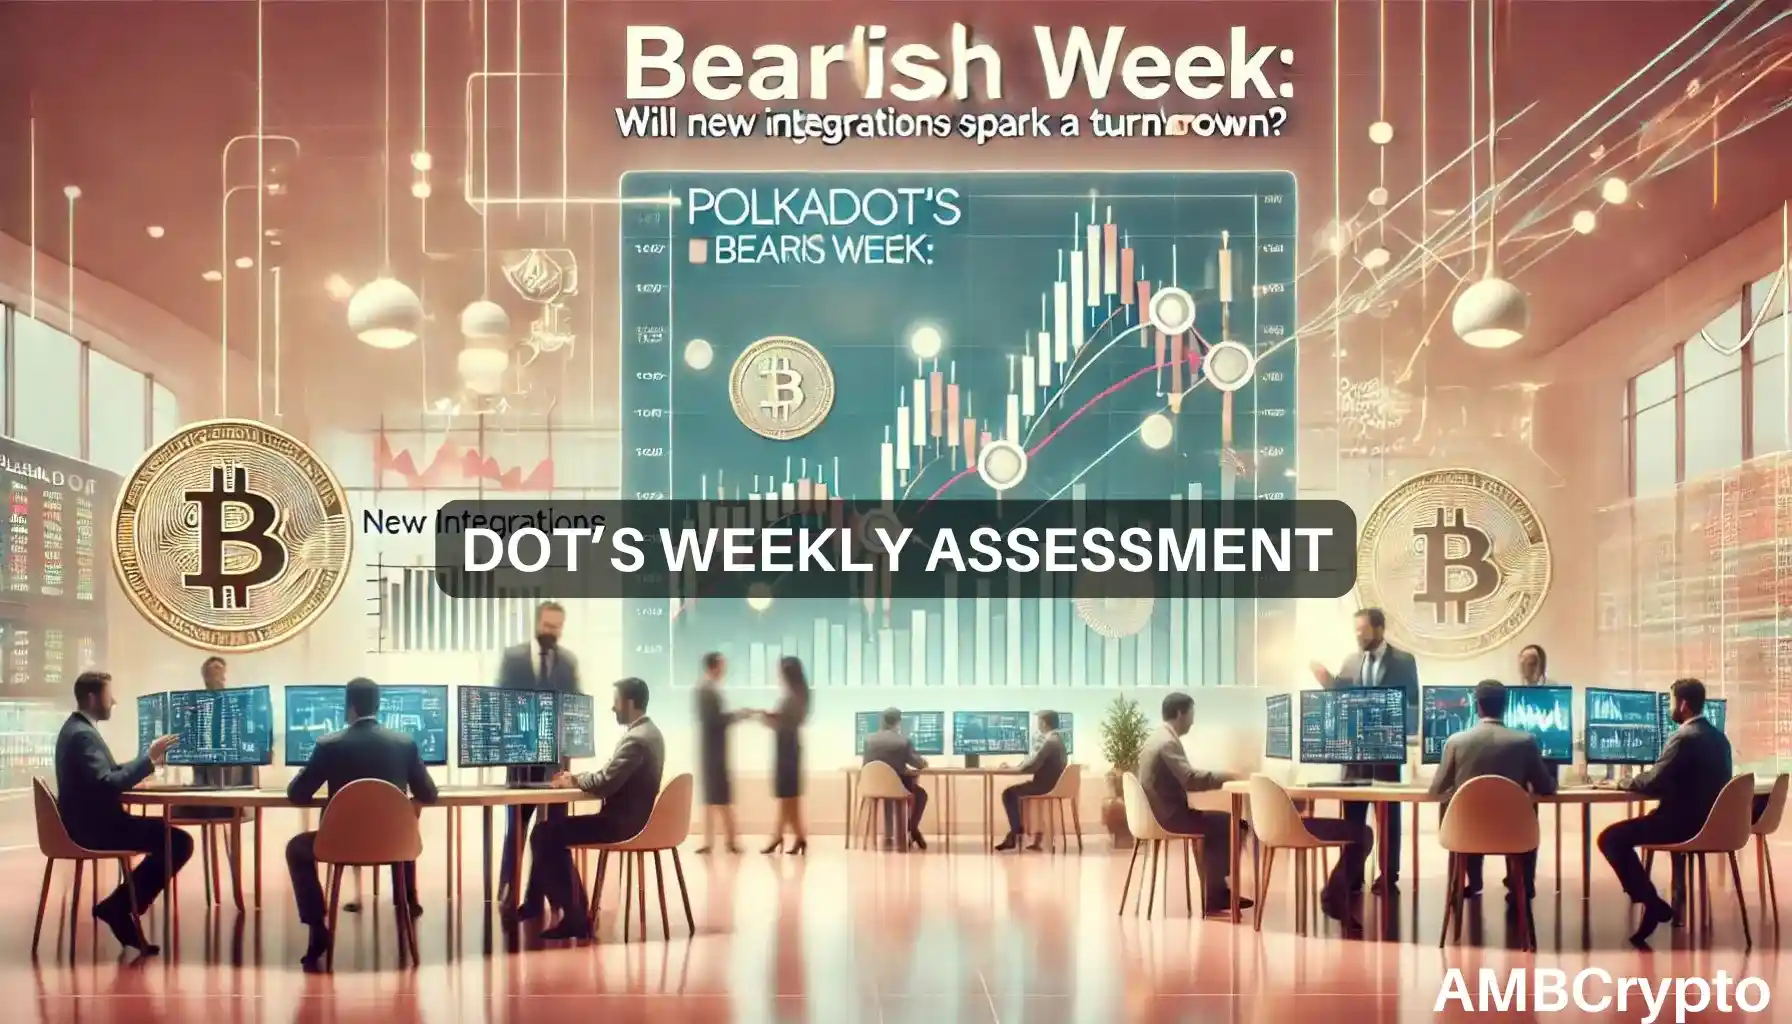 Polkadot’s bearish week: Will THESE new integrations spark a turnaround?